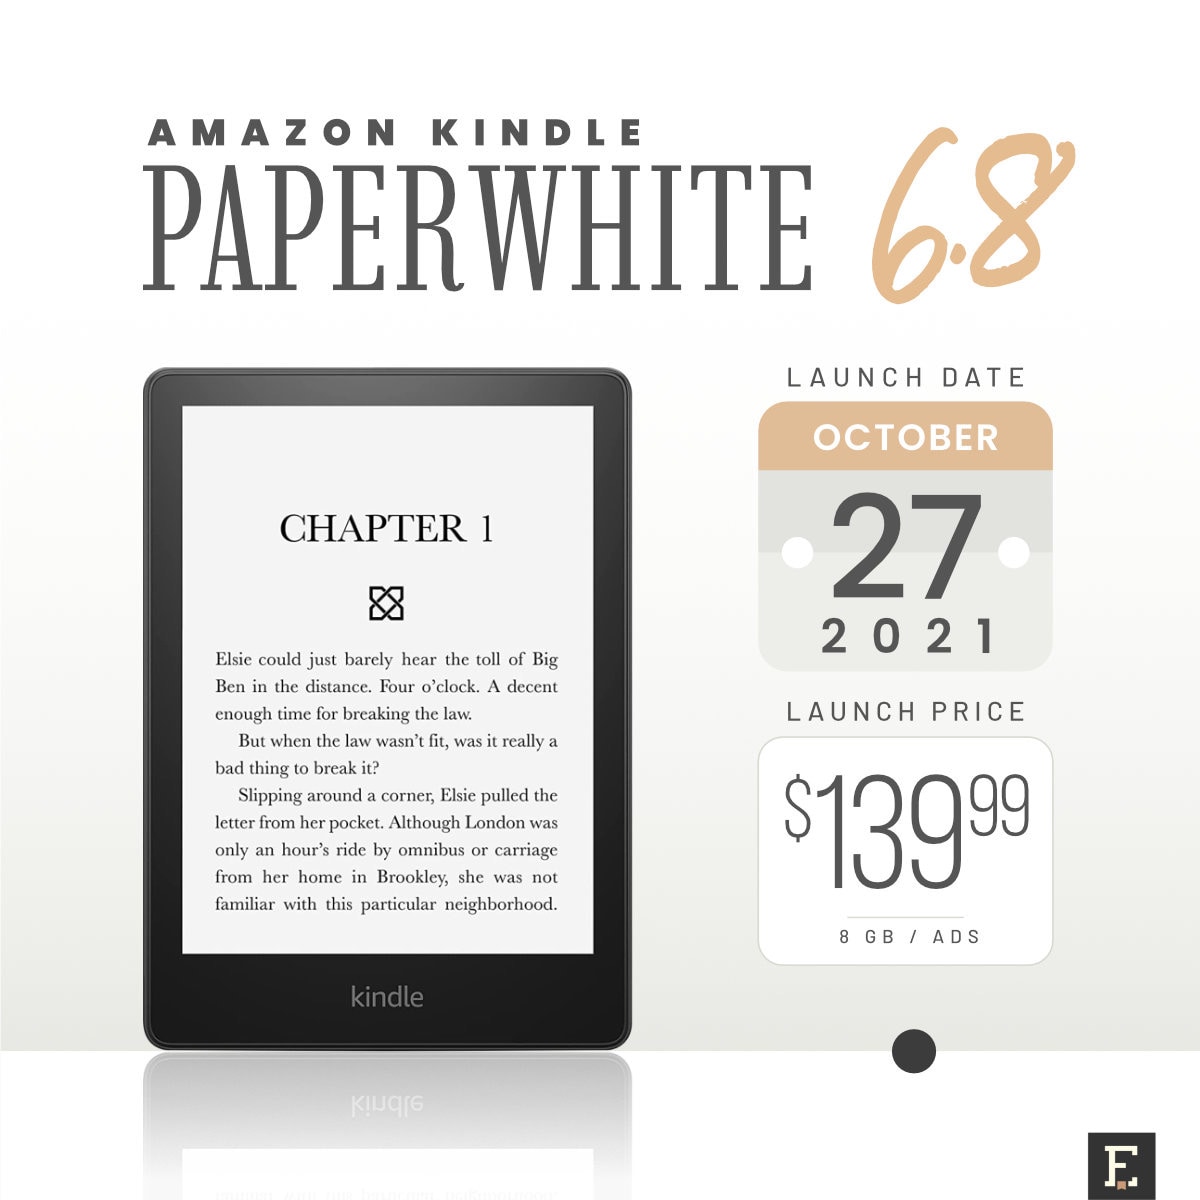 Amazon Kindle Paperwhite 6.8 2021 full specs